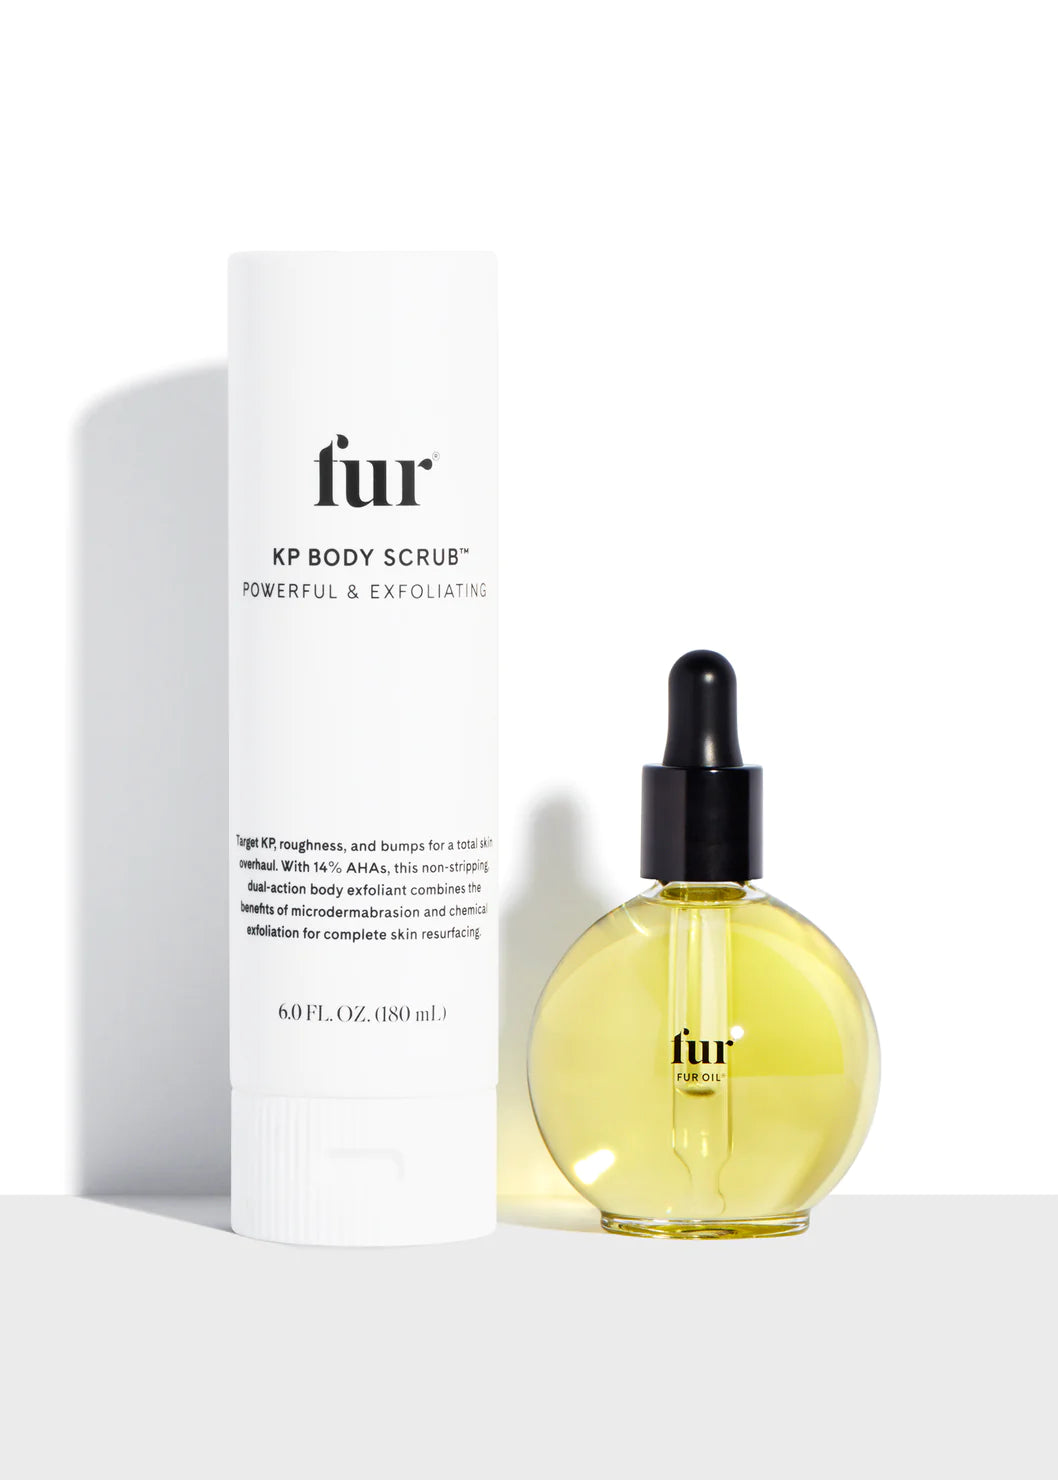 Fur Oil and KP Body Scrub Duo 